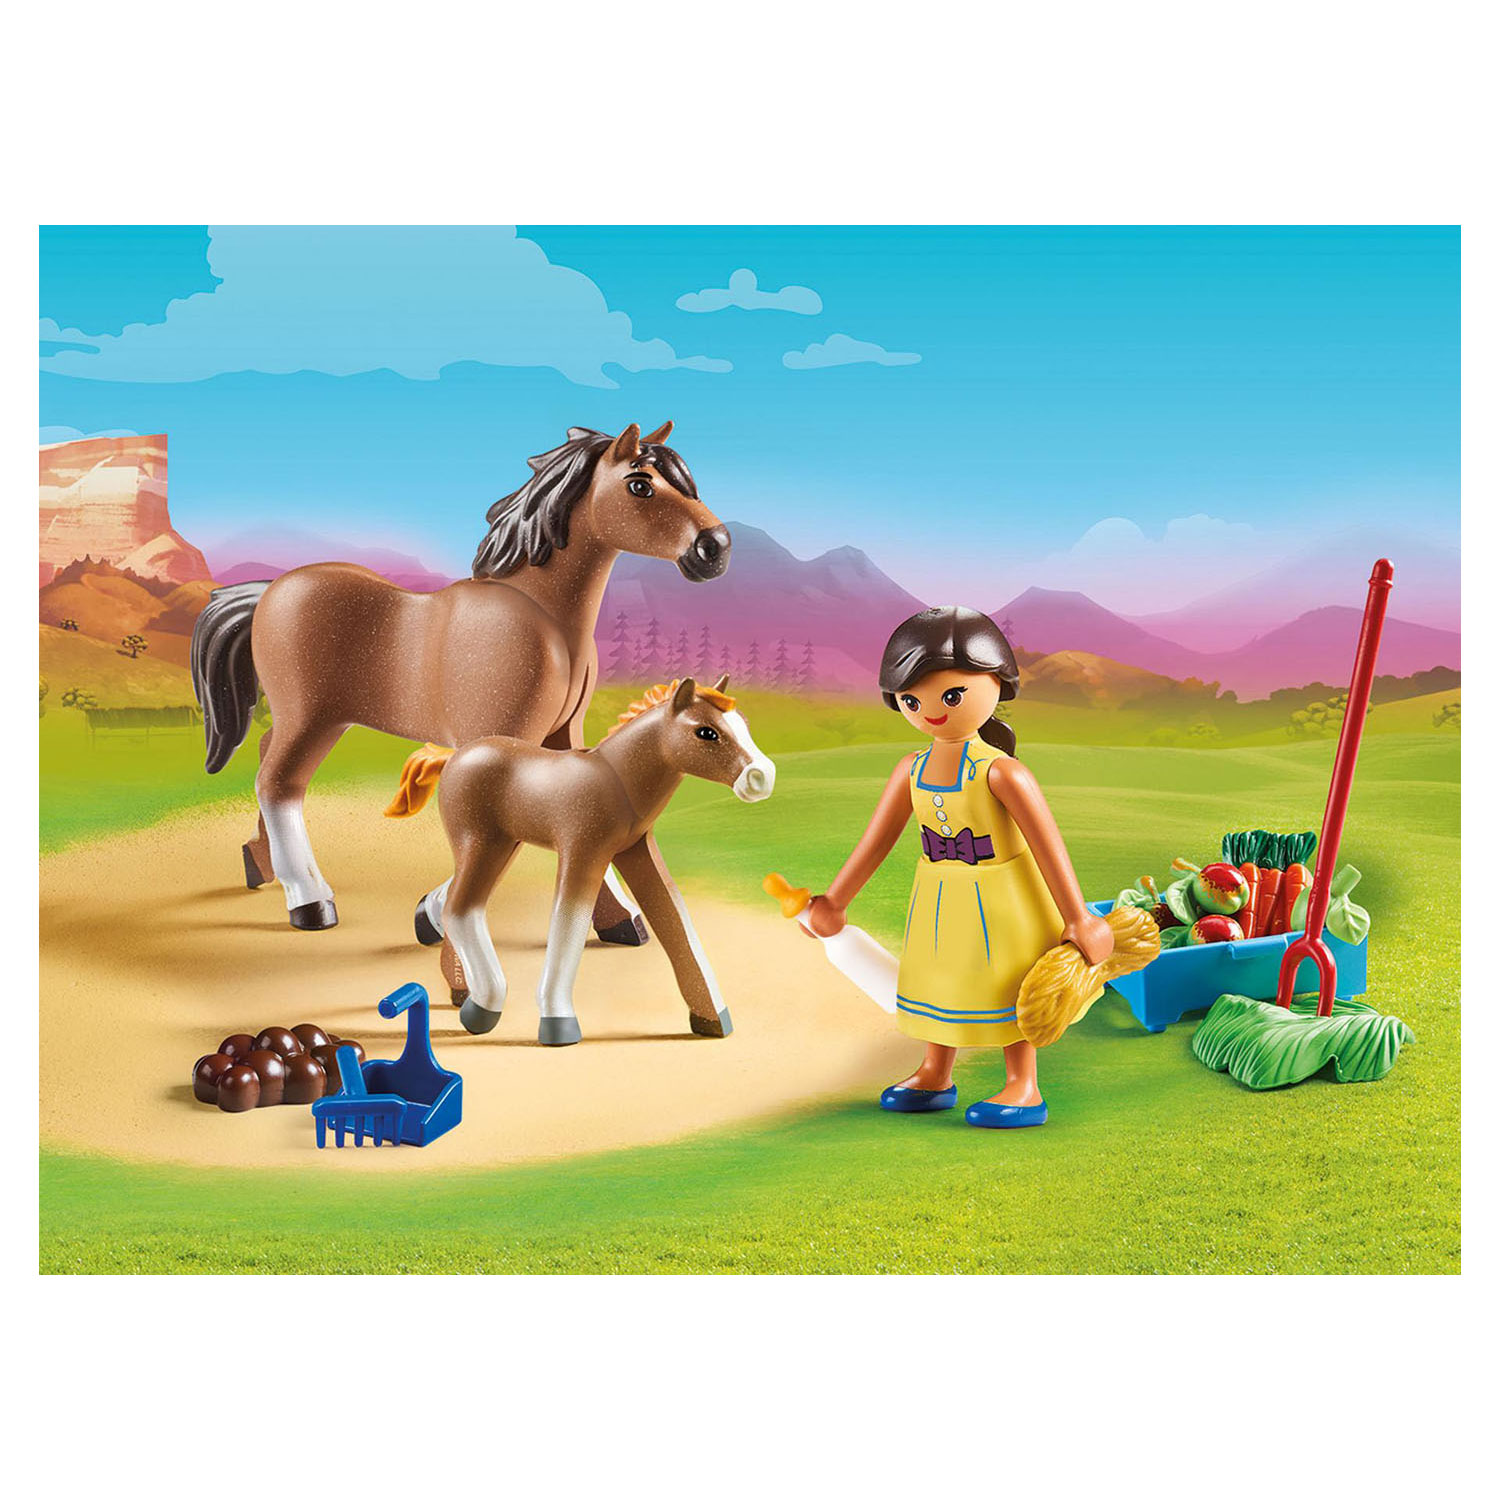 Playmobil Spirit Pru met Paard en Veulen - 70122